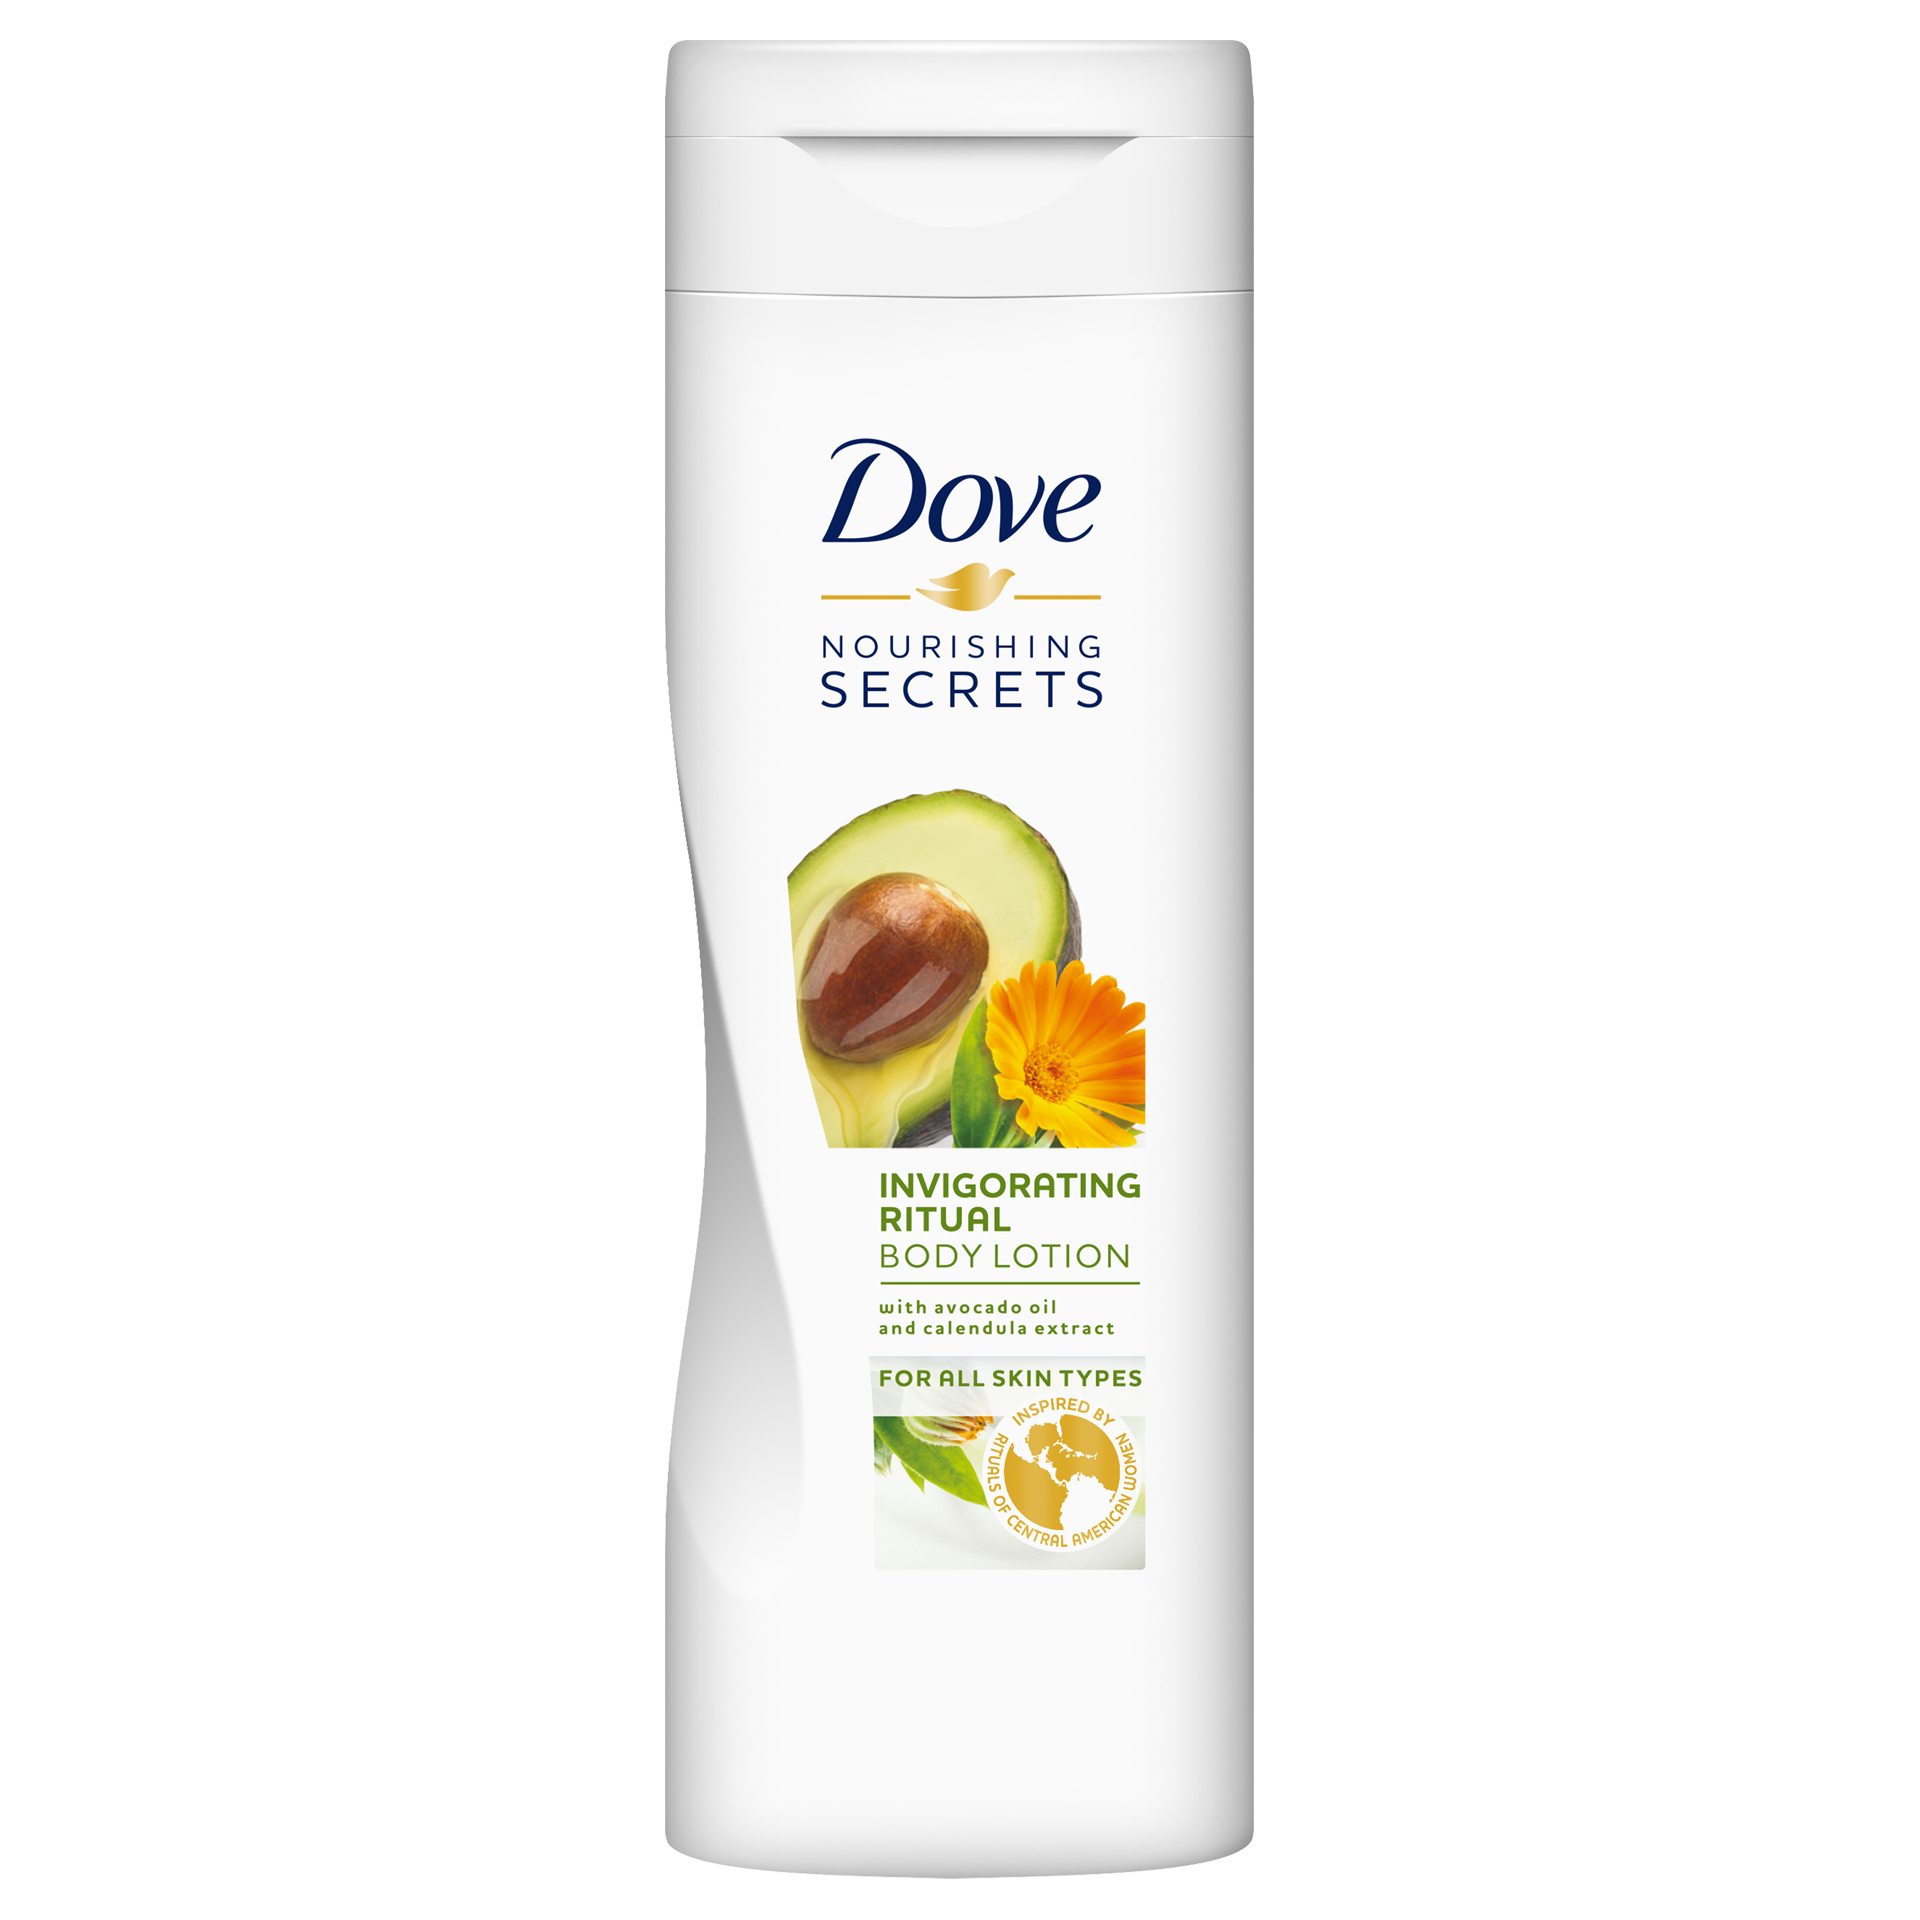 Dove Nourishing Secrets Lotion Invigorating Ritual- Avocado Oil and Calendula Extract 250ml